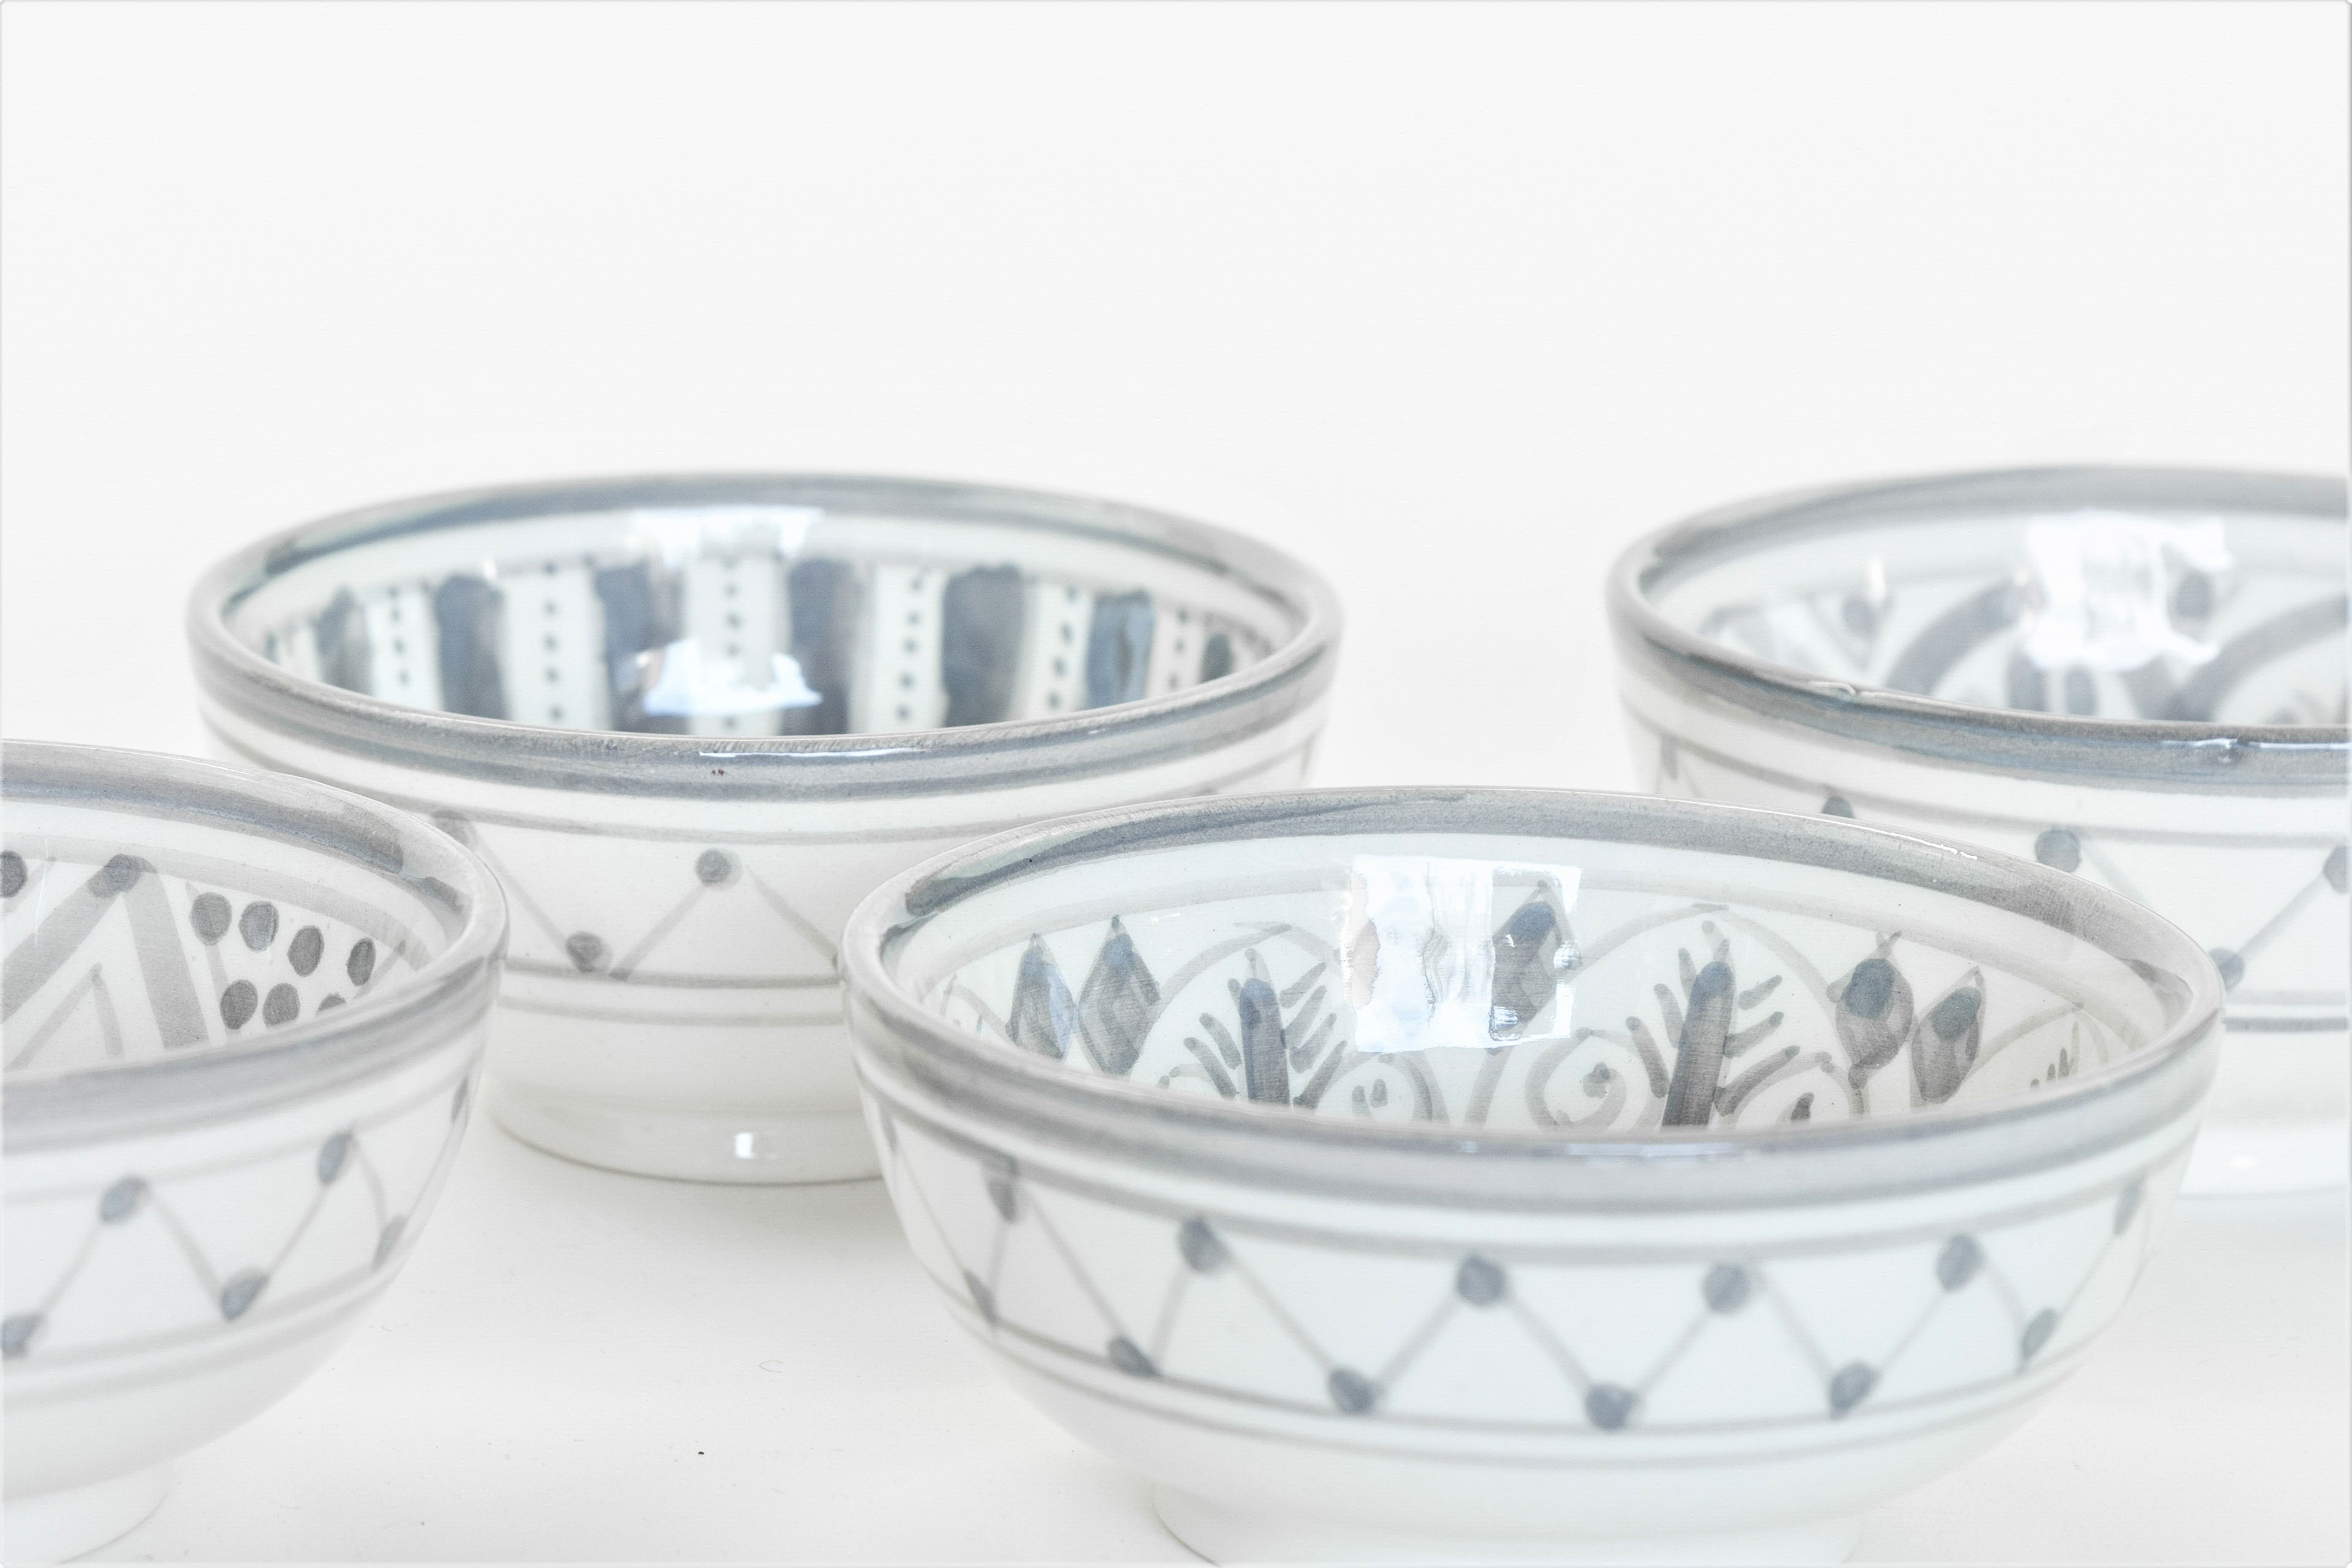 SAFI TAPAS bowl set of 4-GRAY